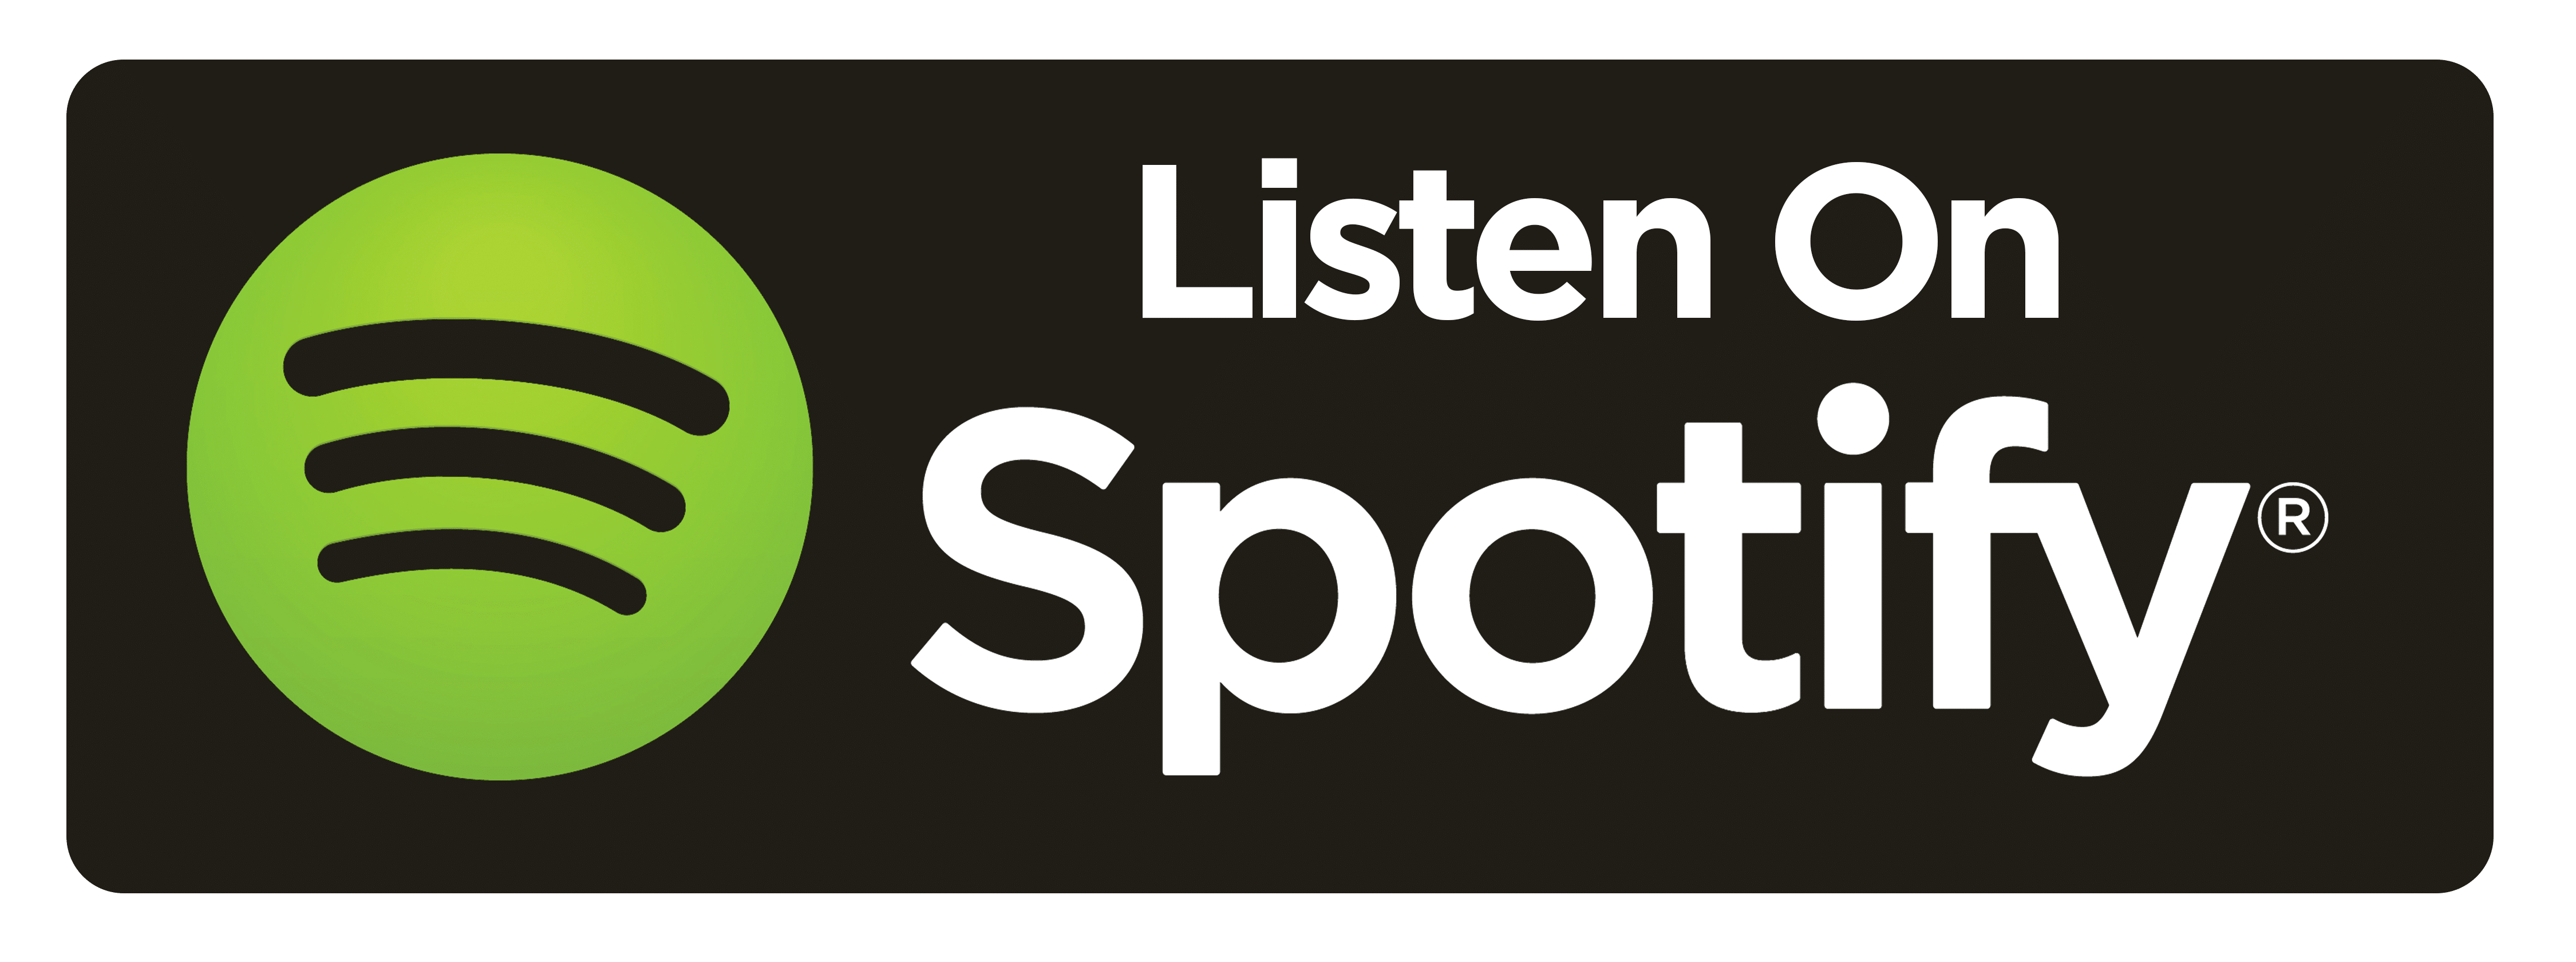 Spotify Logo PNG Transparent Spotify Logo.PNG Images ... - Spotify Background